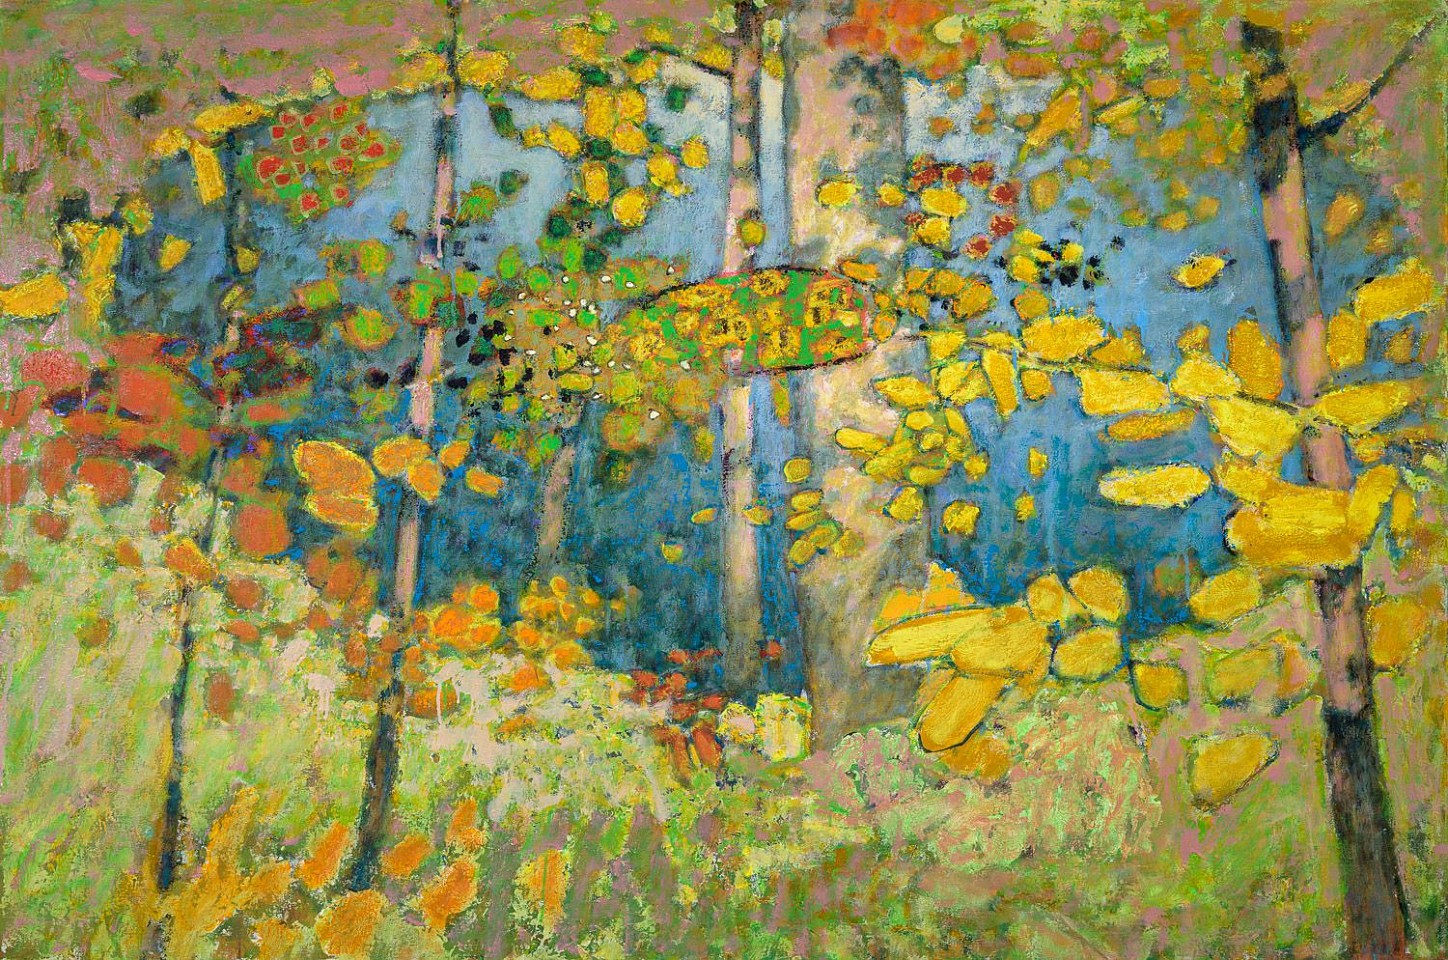 Richard Stevens, Forest Fabulation, 2023
oil on canvas, 36"x 54", 38"x 56" framed
RS 022
Sold